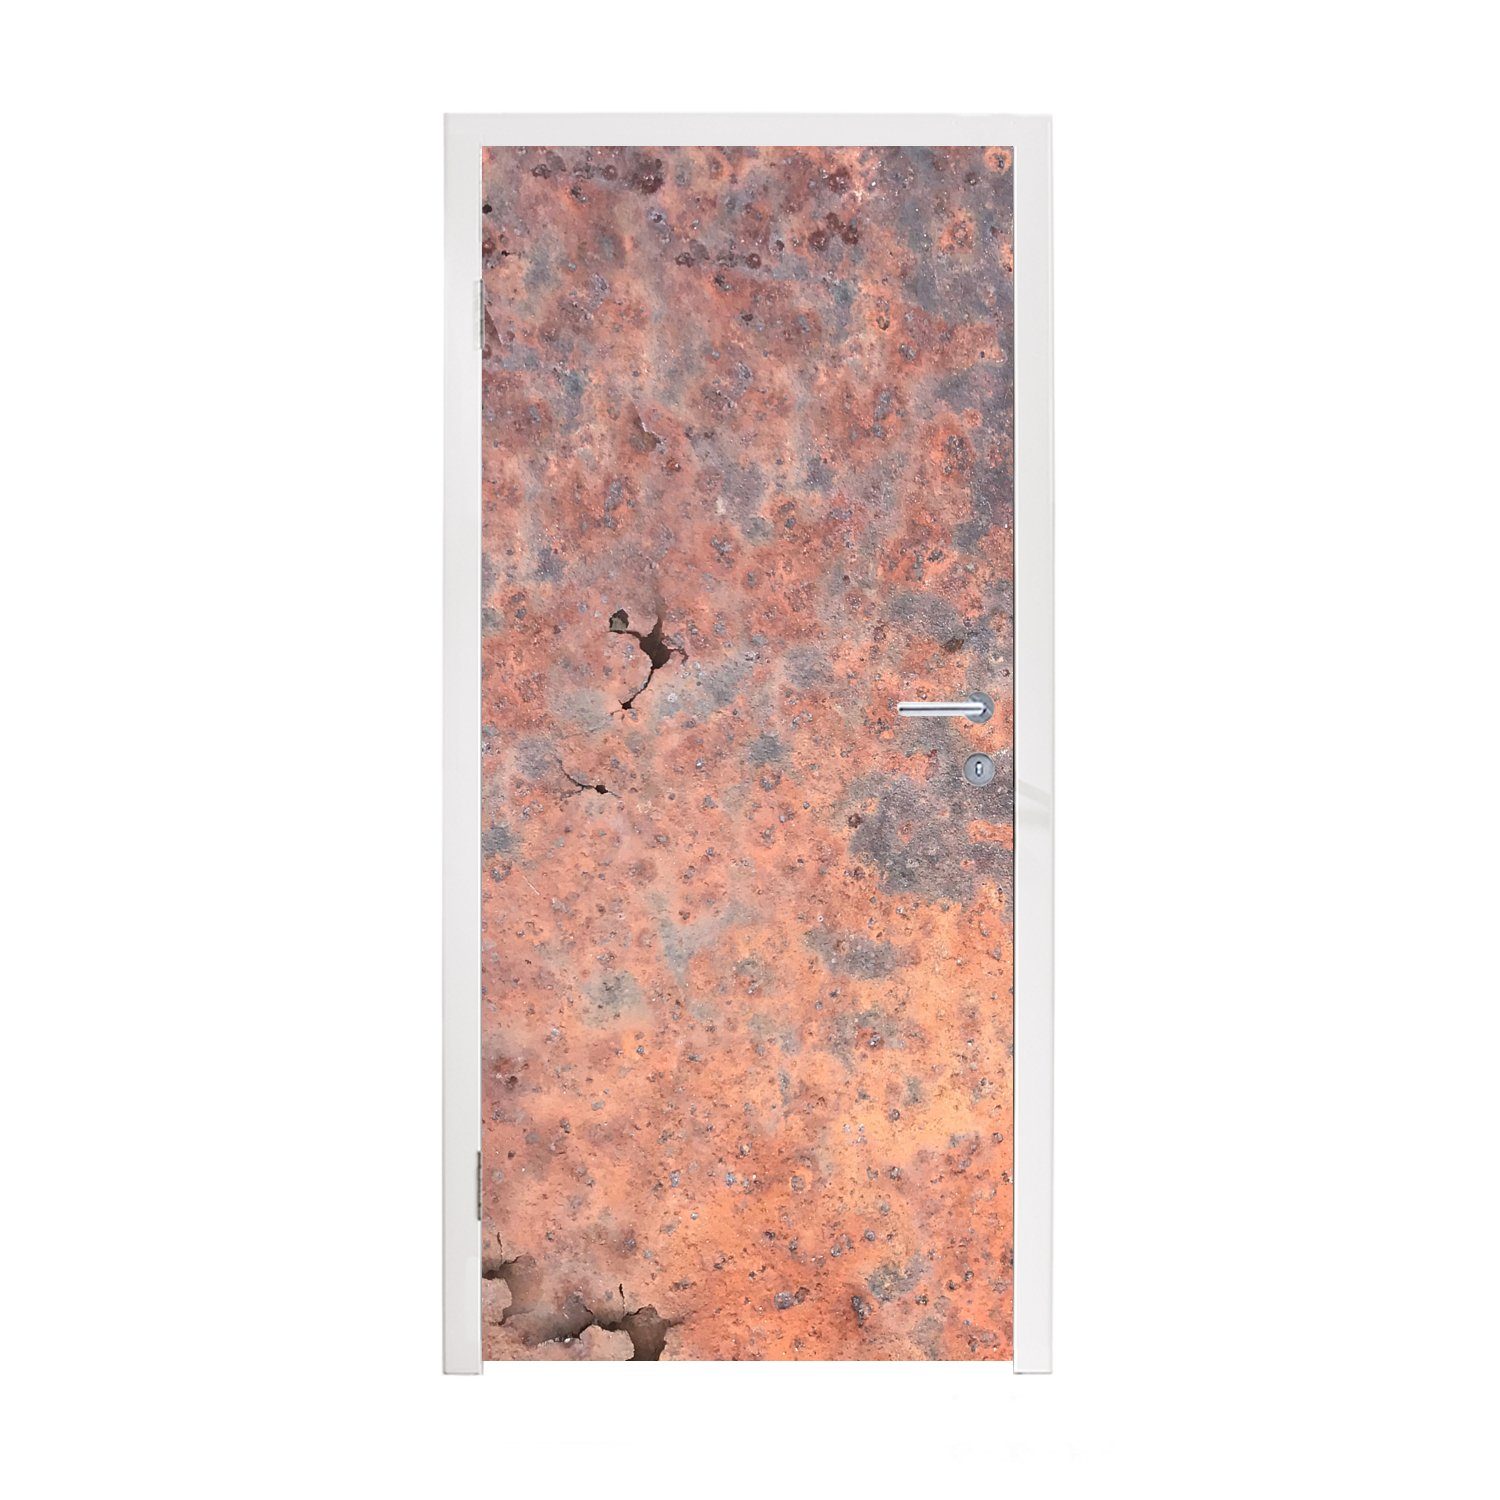 MuchoWow Türtapete Metall - Rost - Korrosion, Matt, bedruckt, (1 St), Fototapete für Tür, Türaufkleber, 75x205 cm